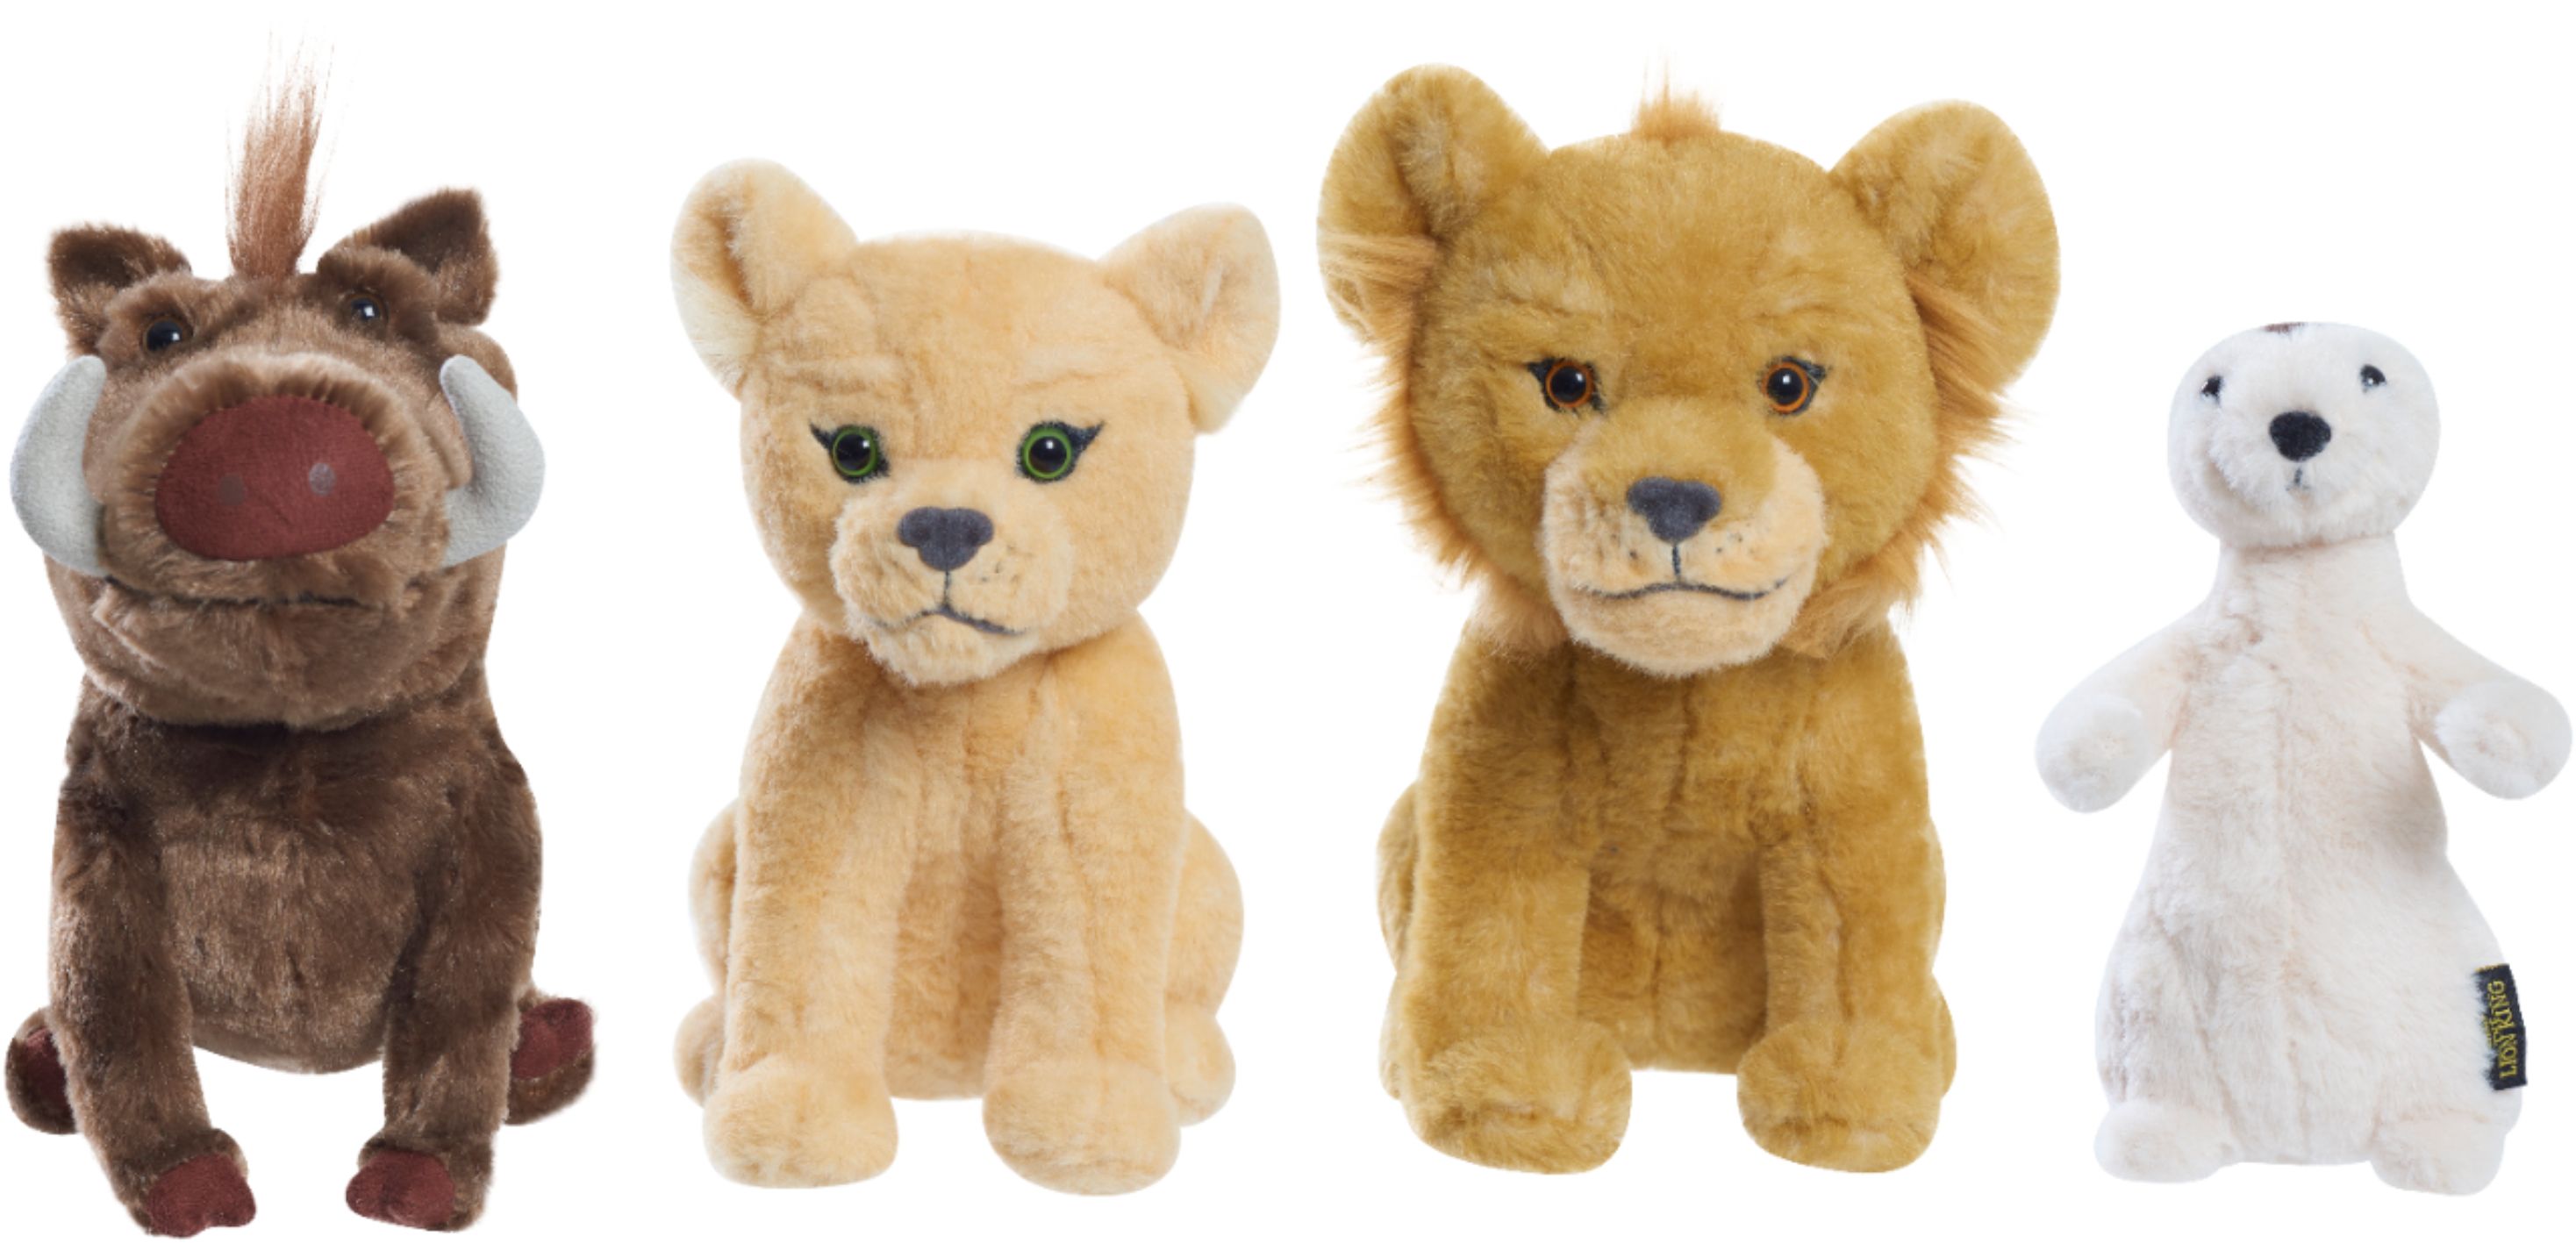 stuffed lion toy